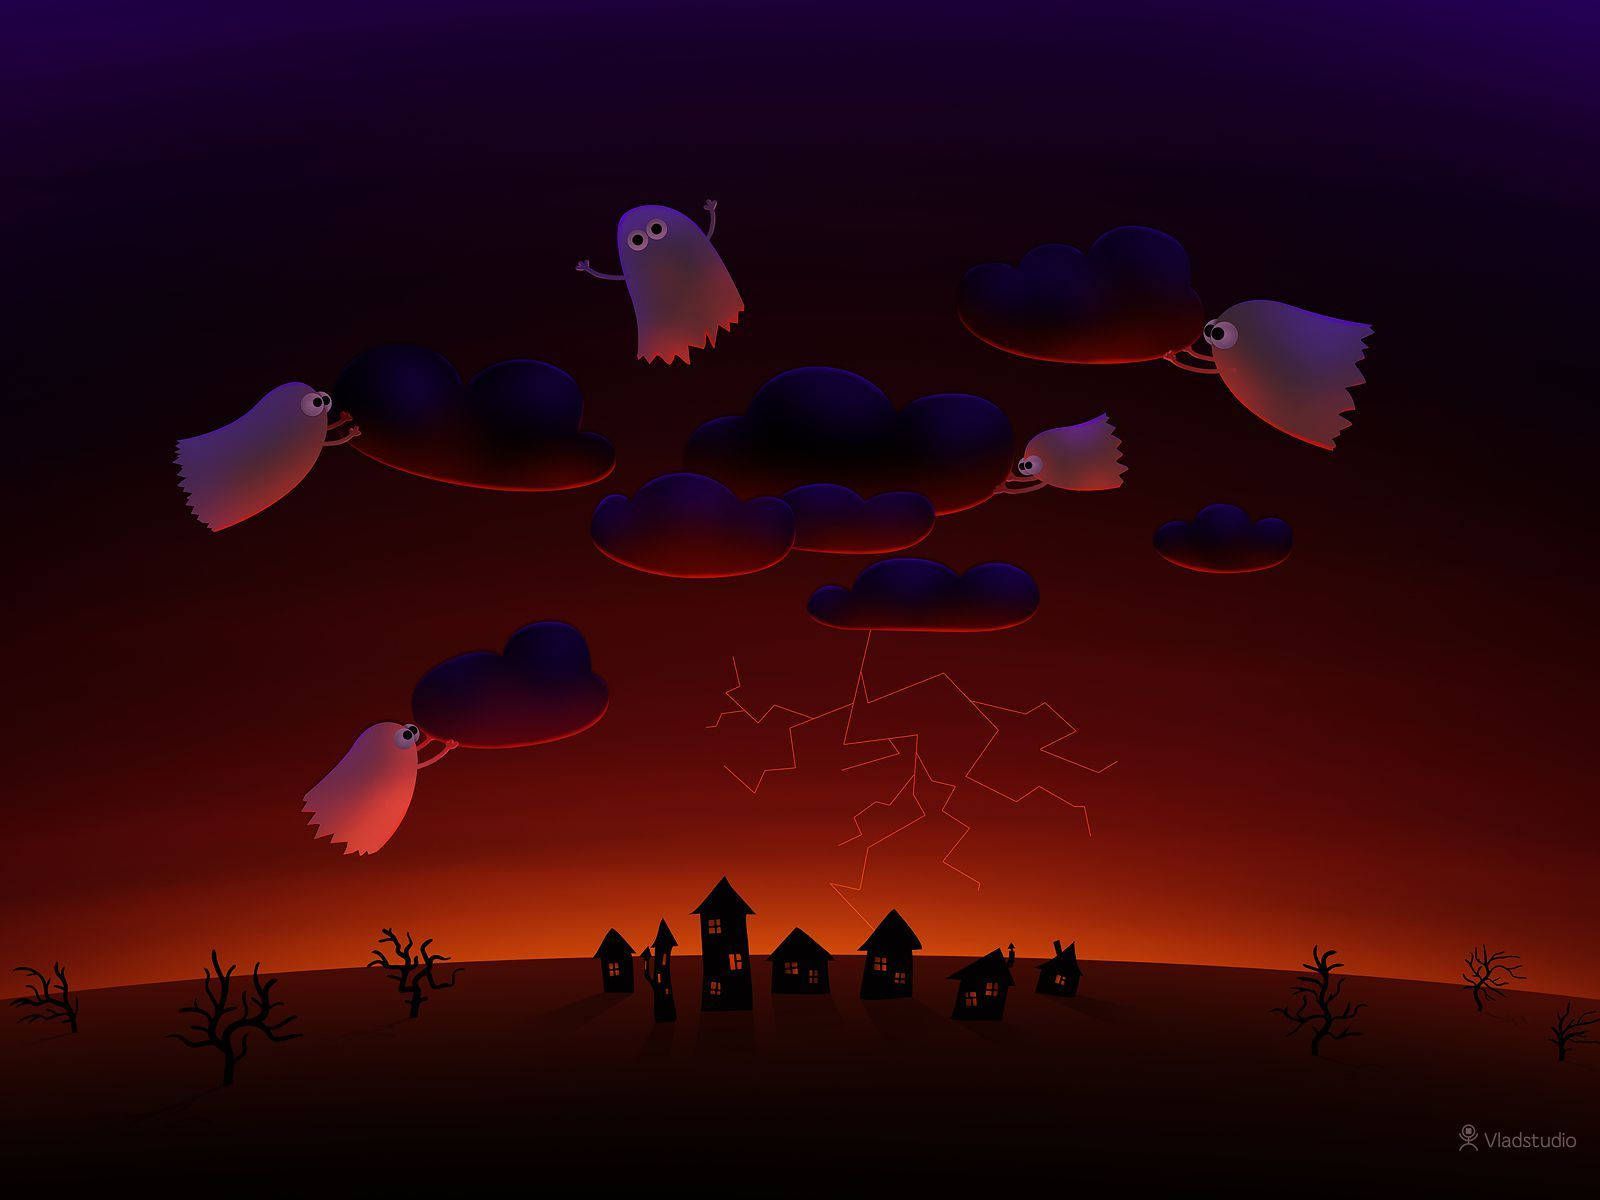 A group of ghosts flying in the sky - Creepy, Halloween desktop, spooky